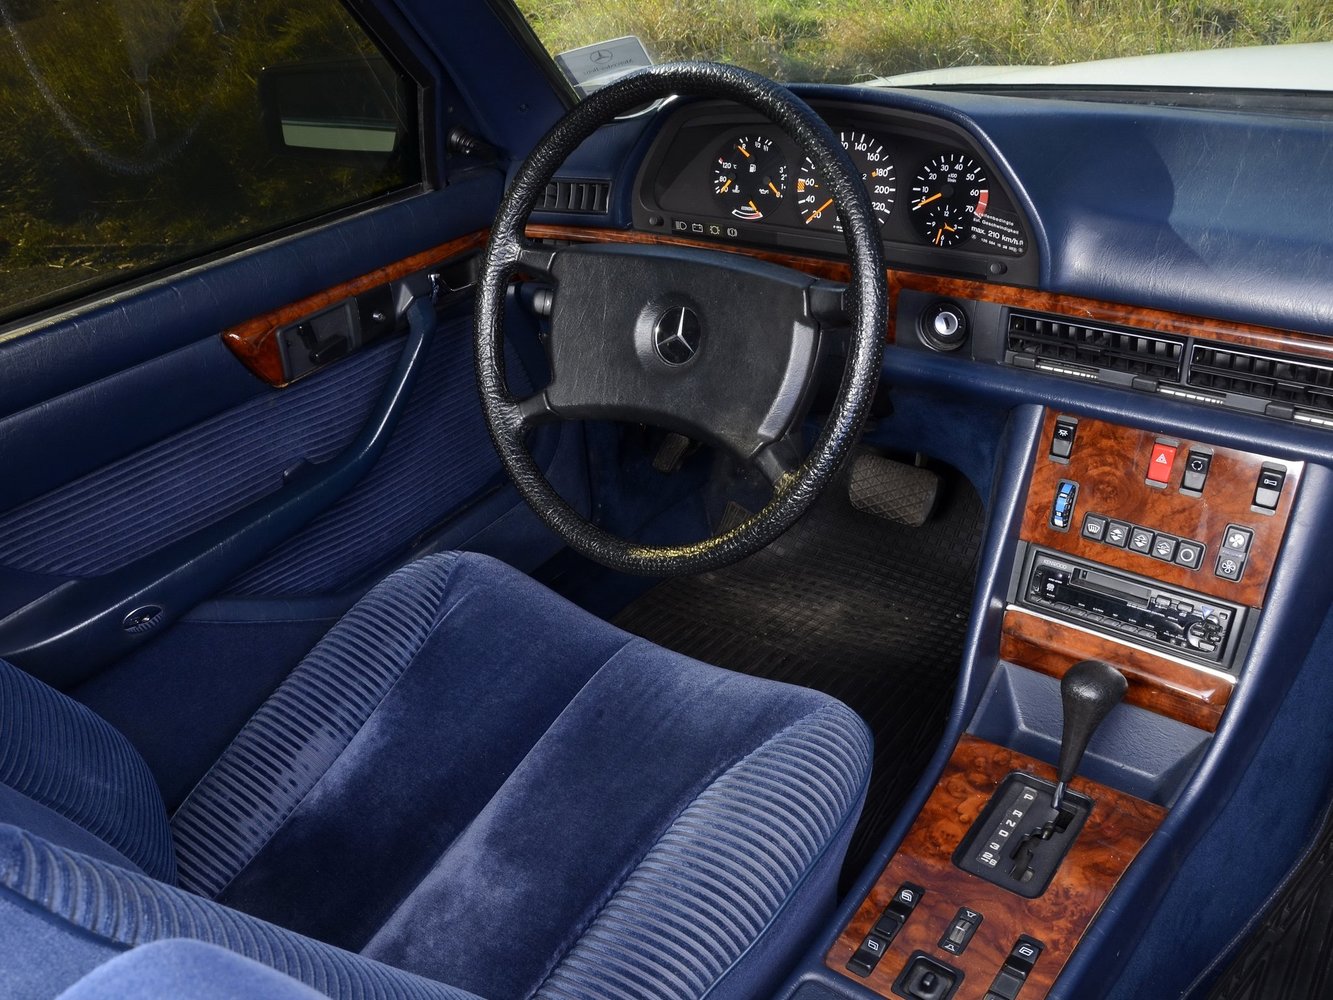 седан Mercedes-Benz S-klasse 1979 - 1985г выпуска модификация 2.7 AT (156 л.с.)